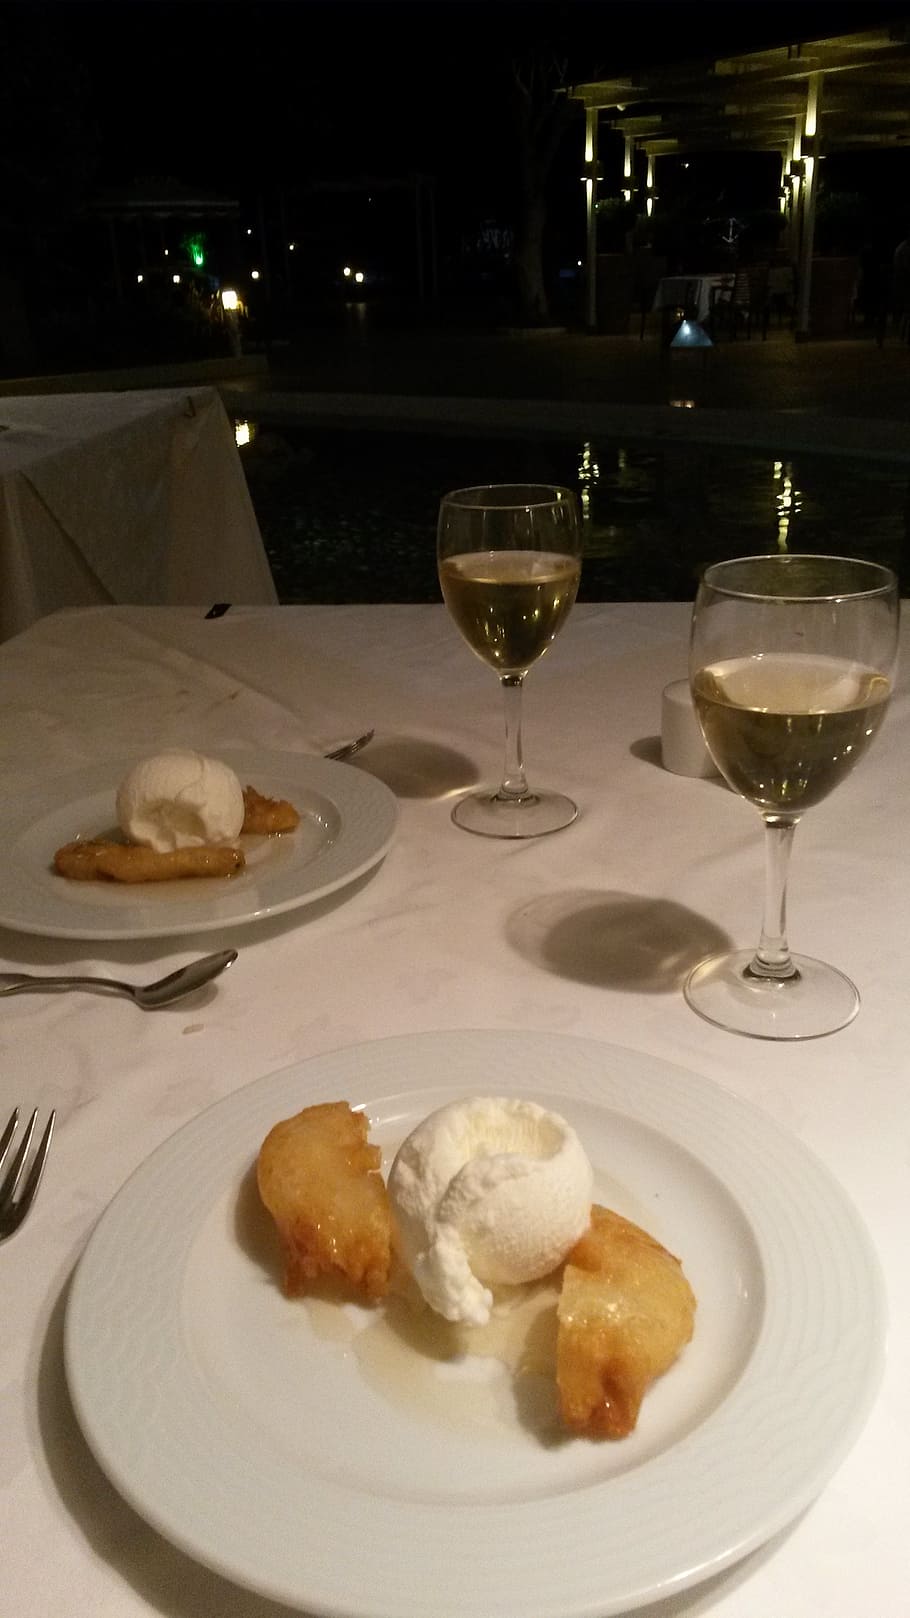 atmosphere, romantic, food, dessert, wine, glass, evening, restaurant, plate, table